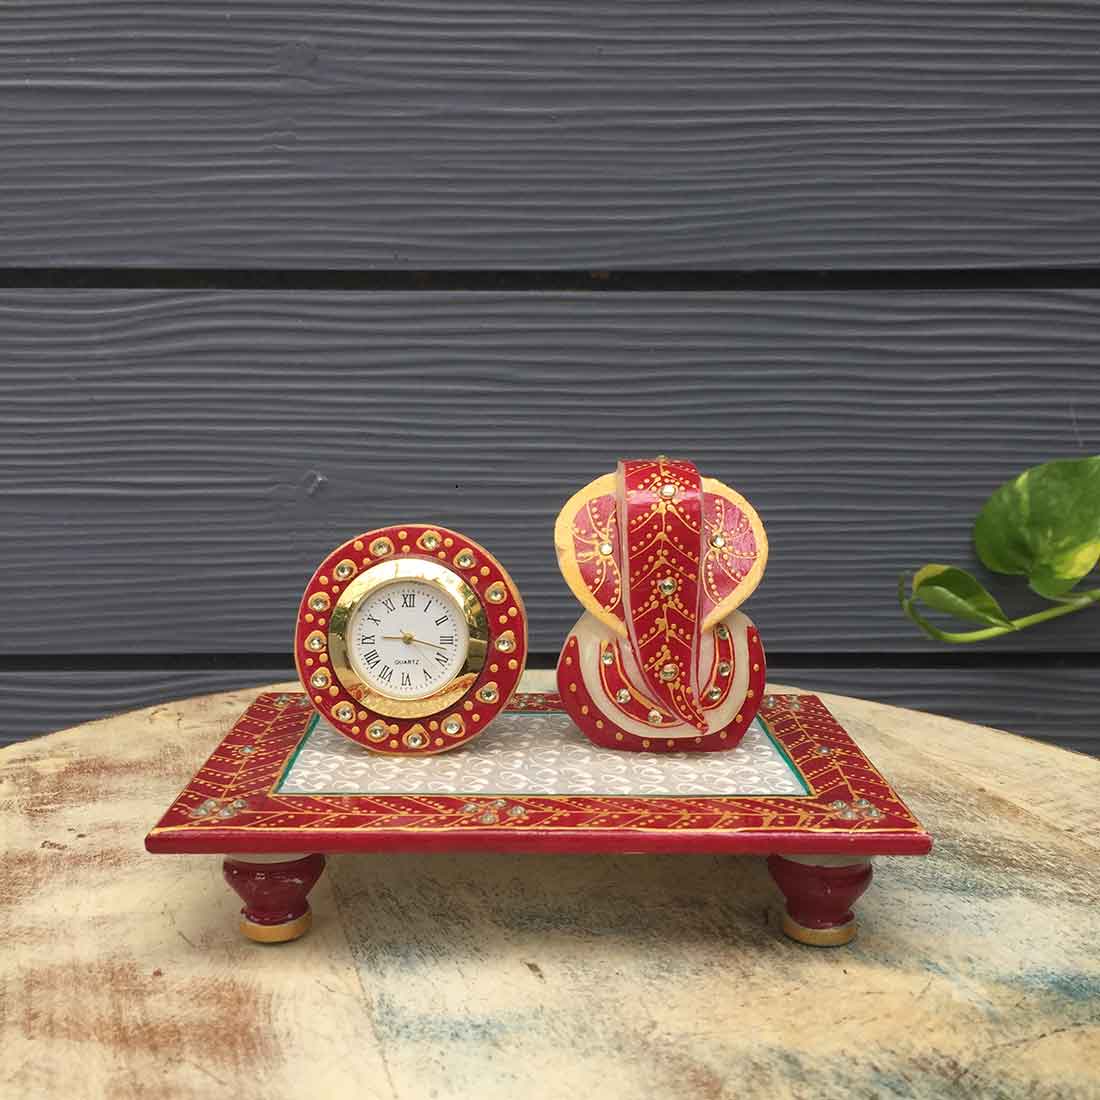 Antique Table Clock - For Table & Shlef Decor -  4 Inch - ApkaMart